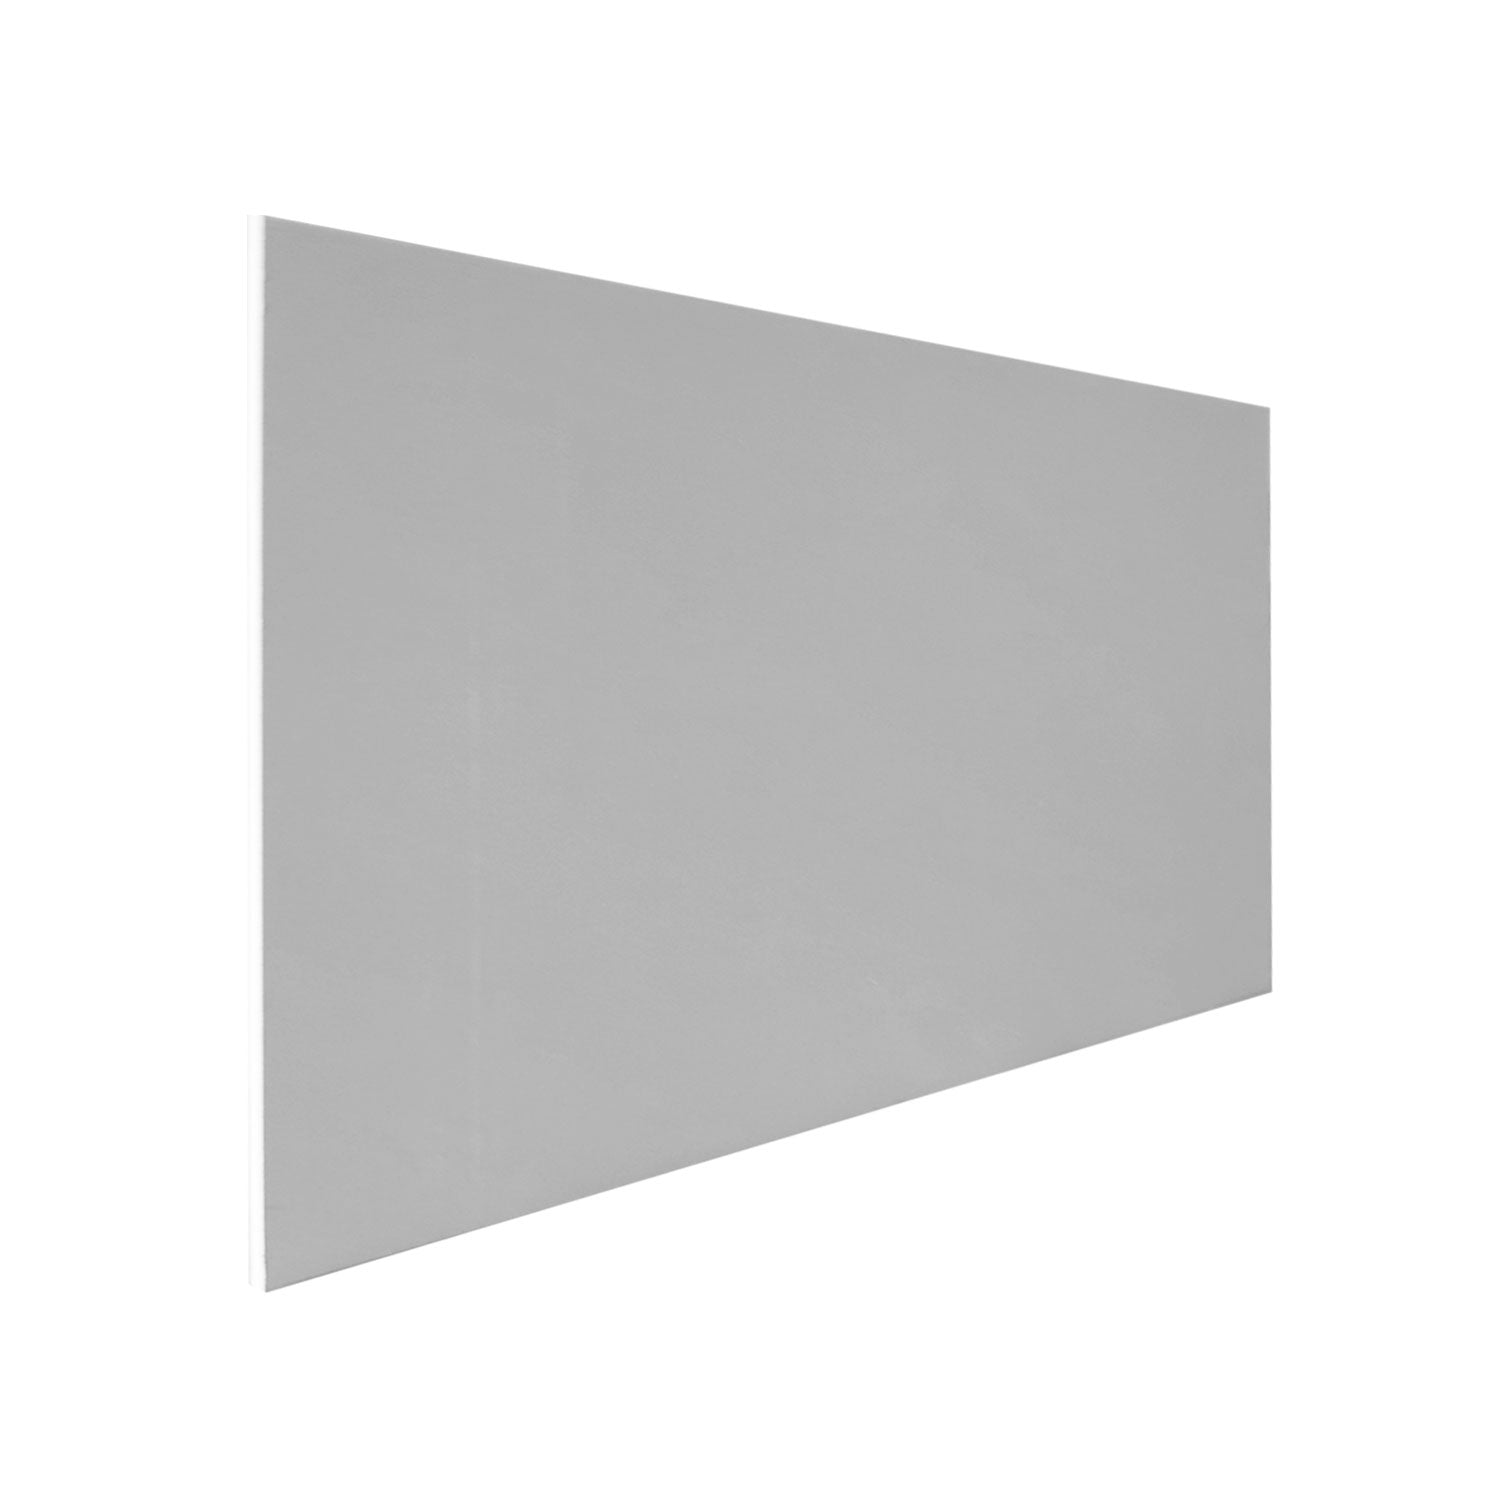 Plasterboard 8' x 4' x 9.5mm Square Edge